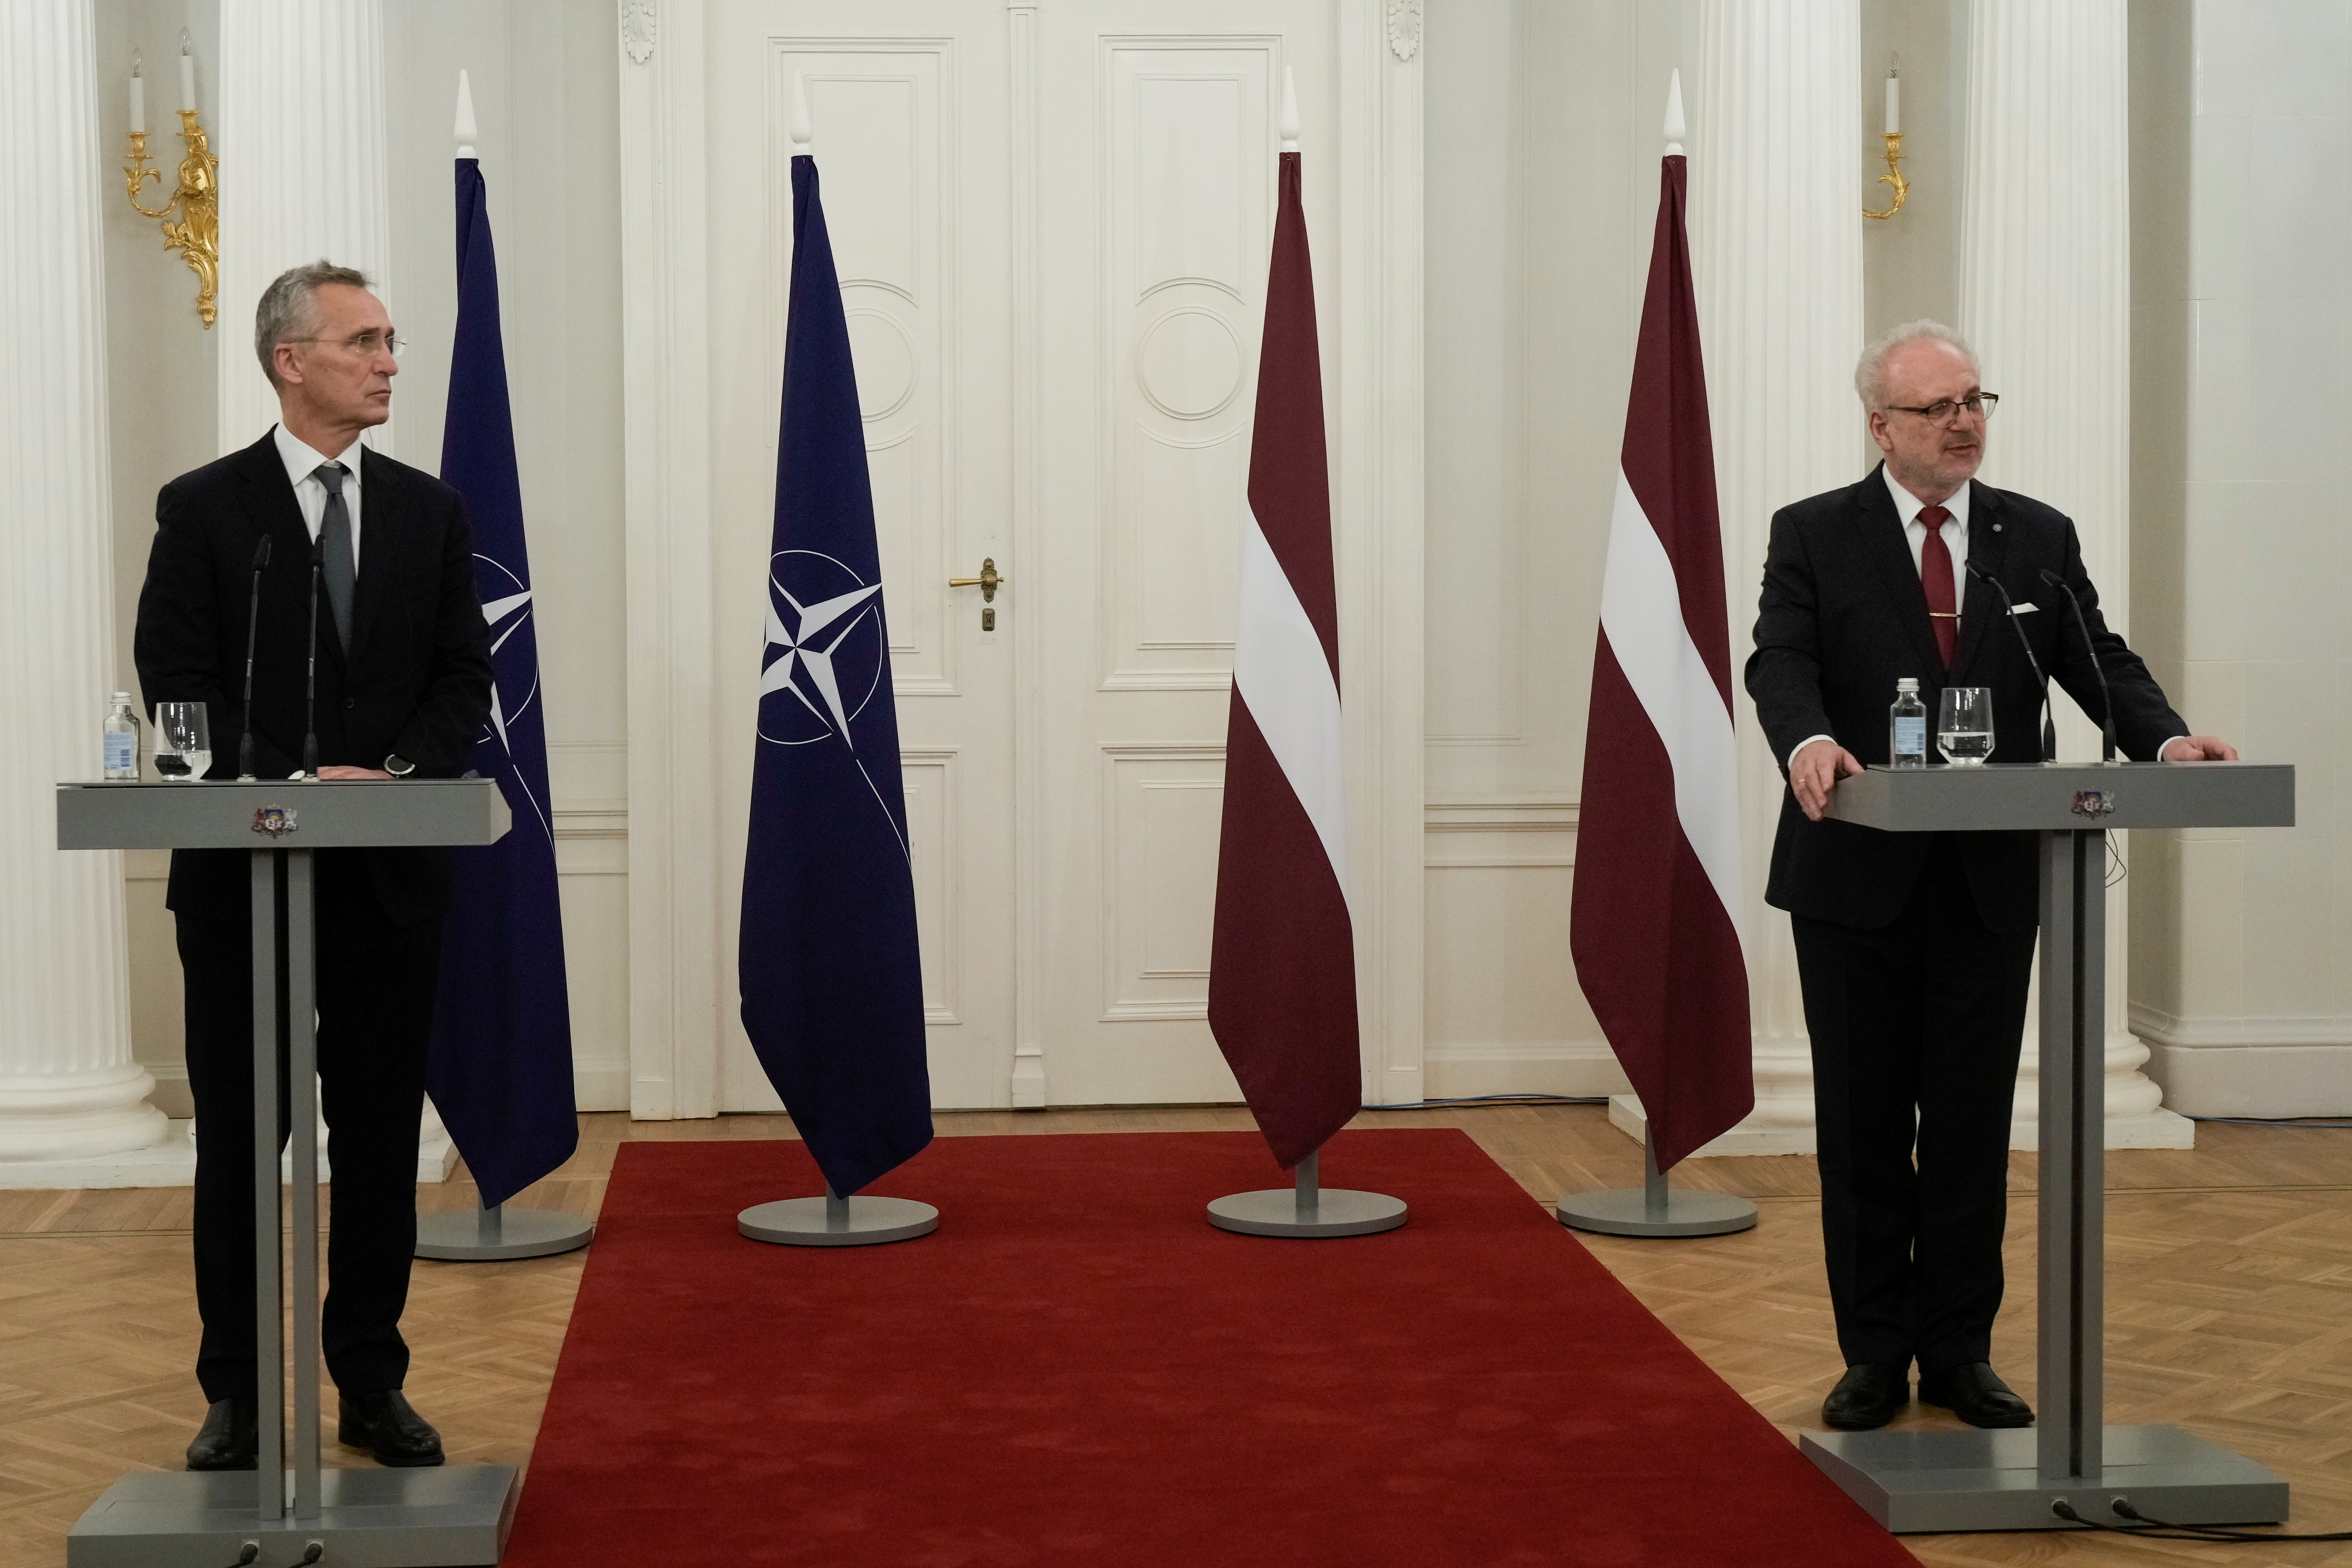 Latvian President Egils Levits and NATO Secretary General Jens Stoltenberg attend a news conference in Riga, Latvia November 29, 2021. REUTERS/Ints Kalnins